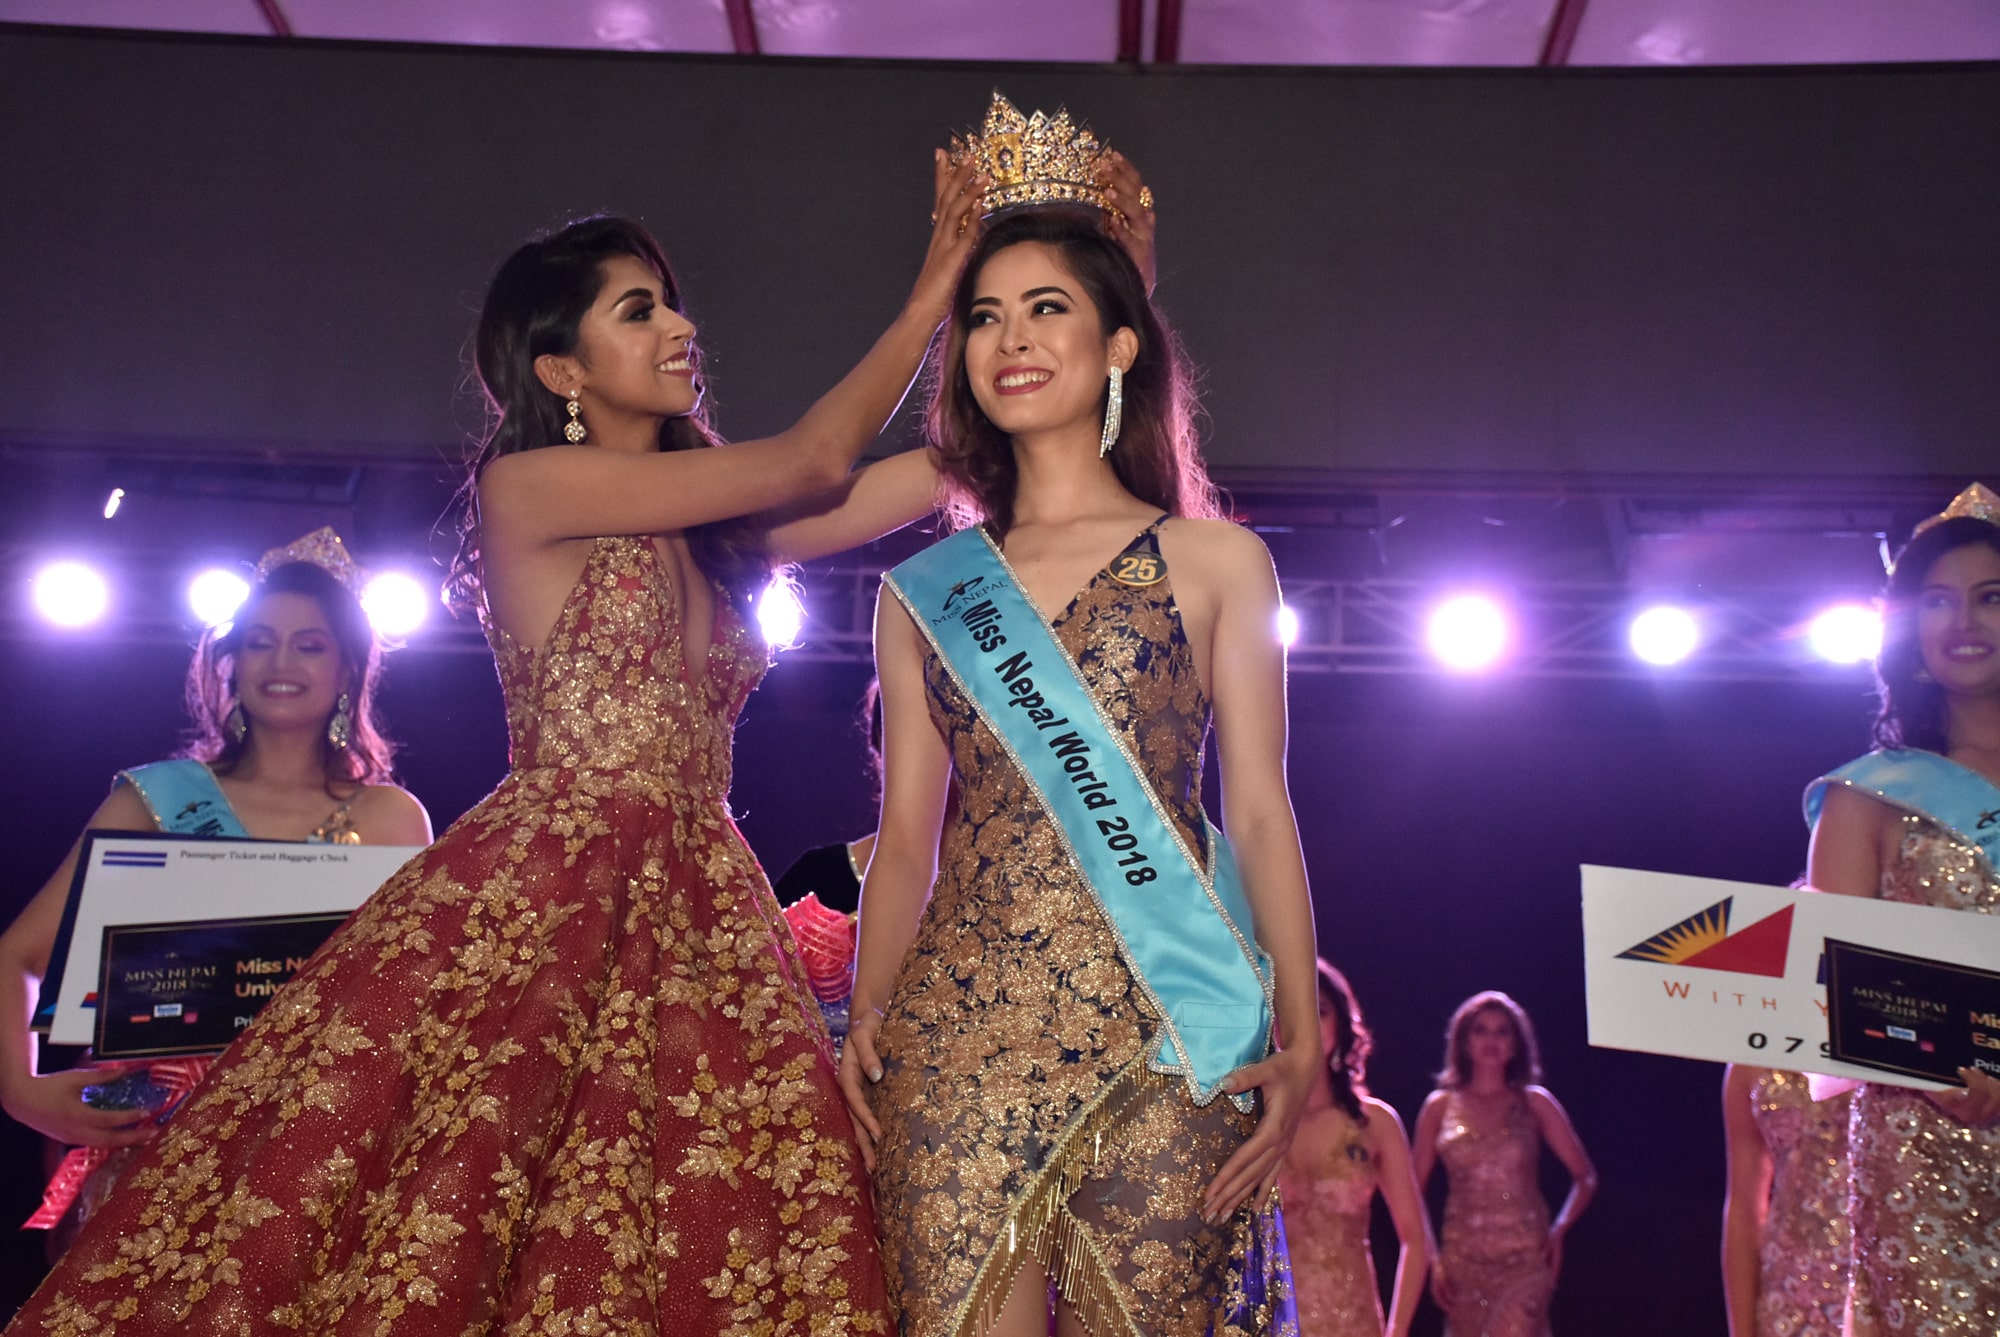 Shrinkhala Khatiwada crowned Miss Nepal World 2018